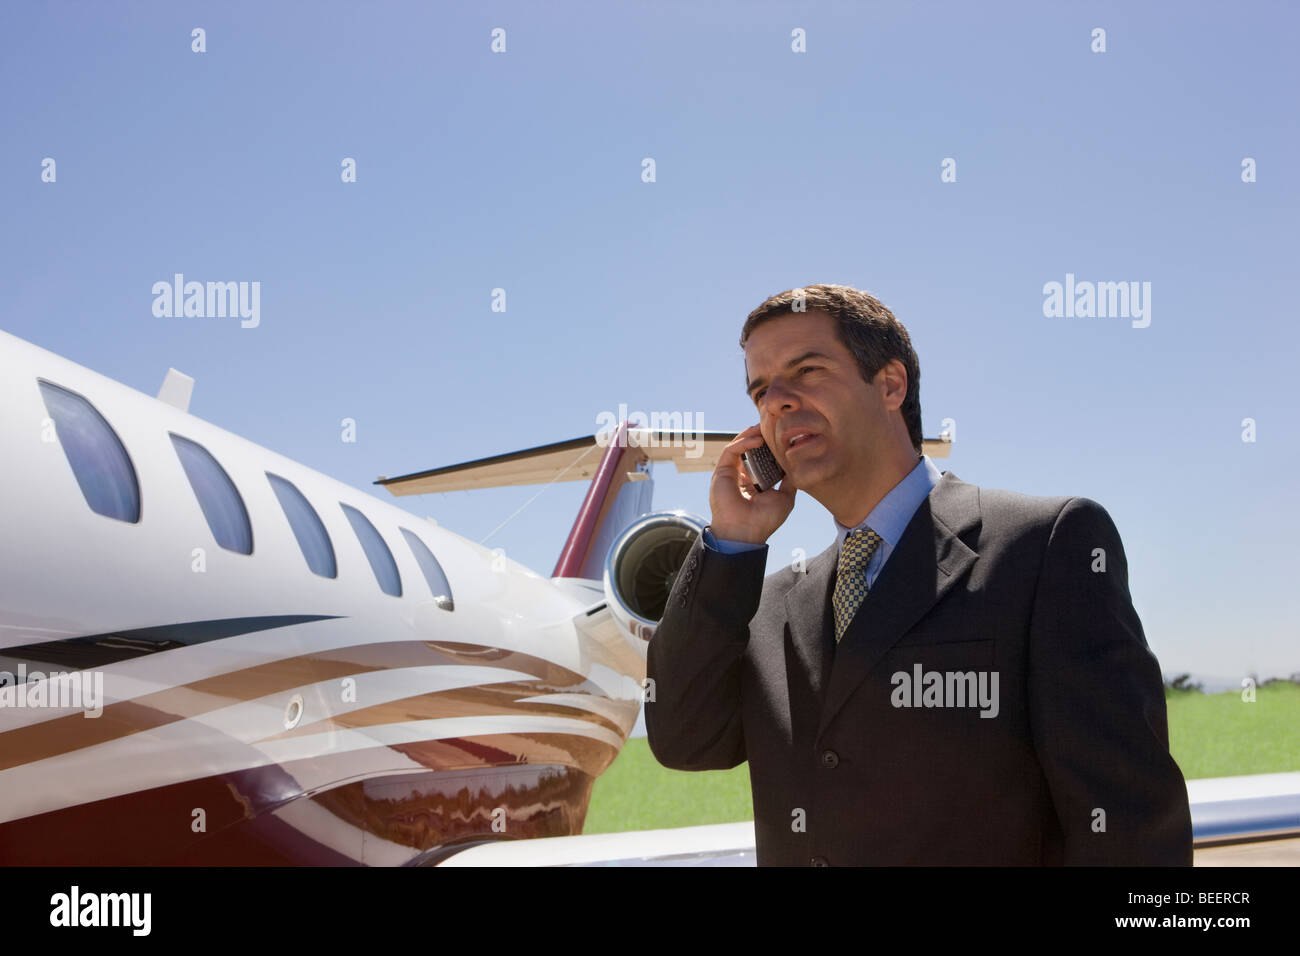 Hispanic businessman using cell phone next to private jet Stock Photo